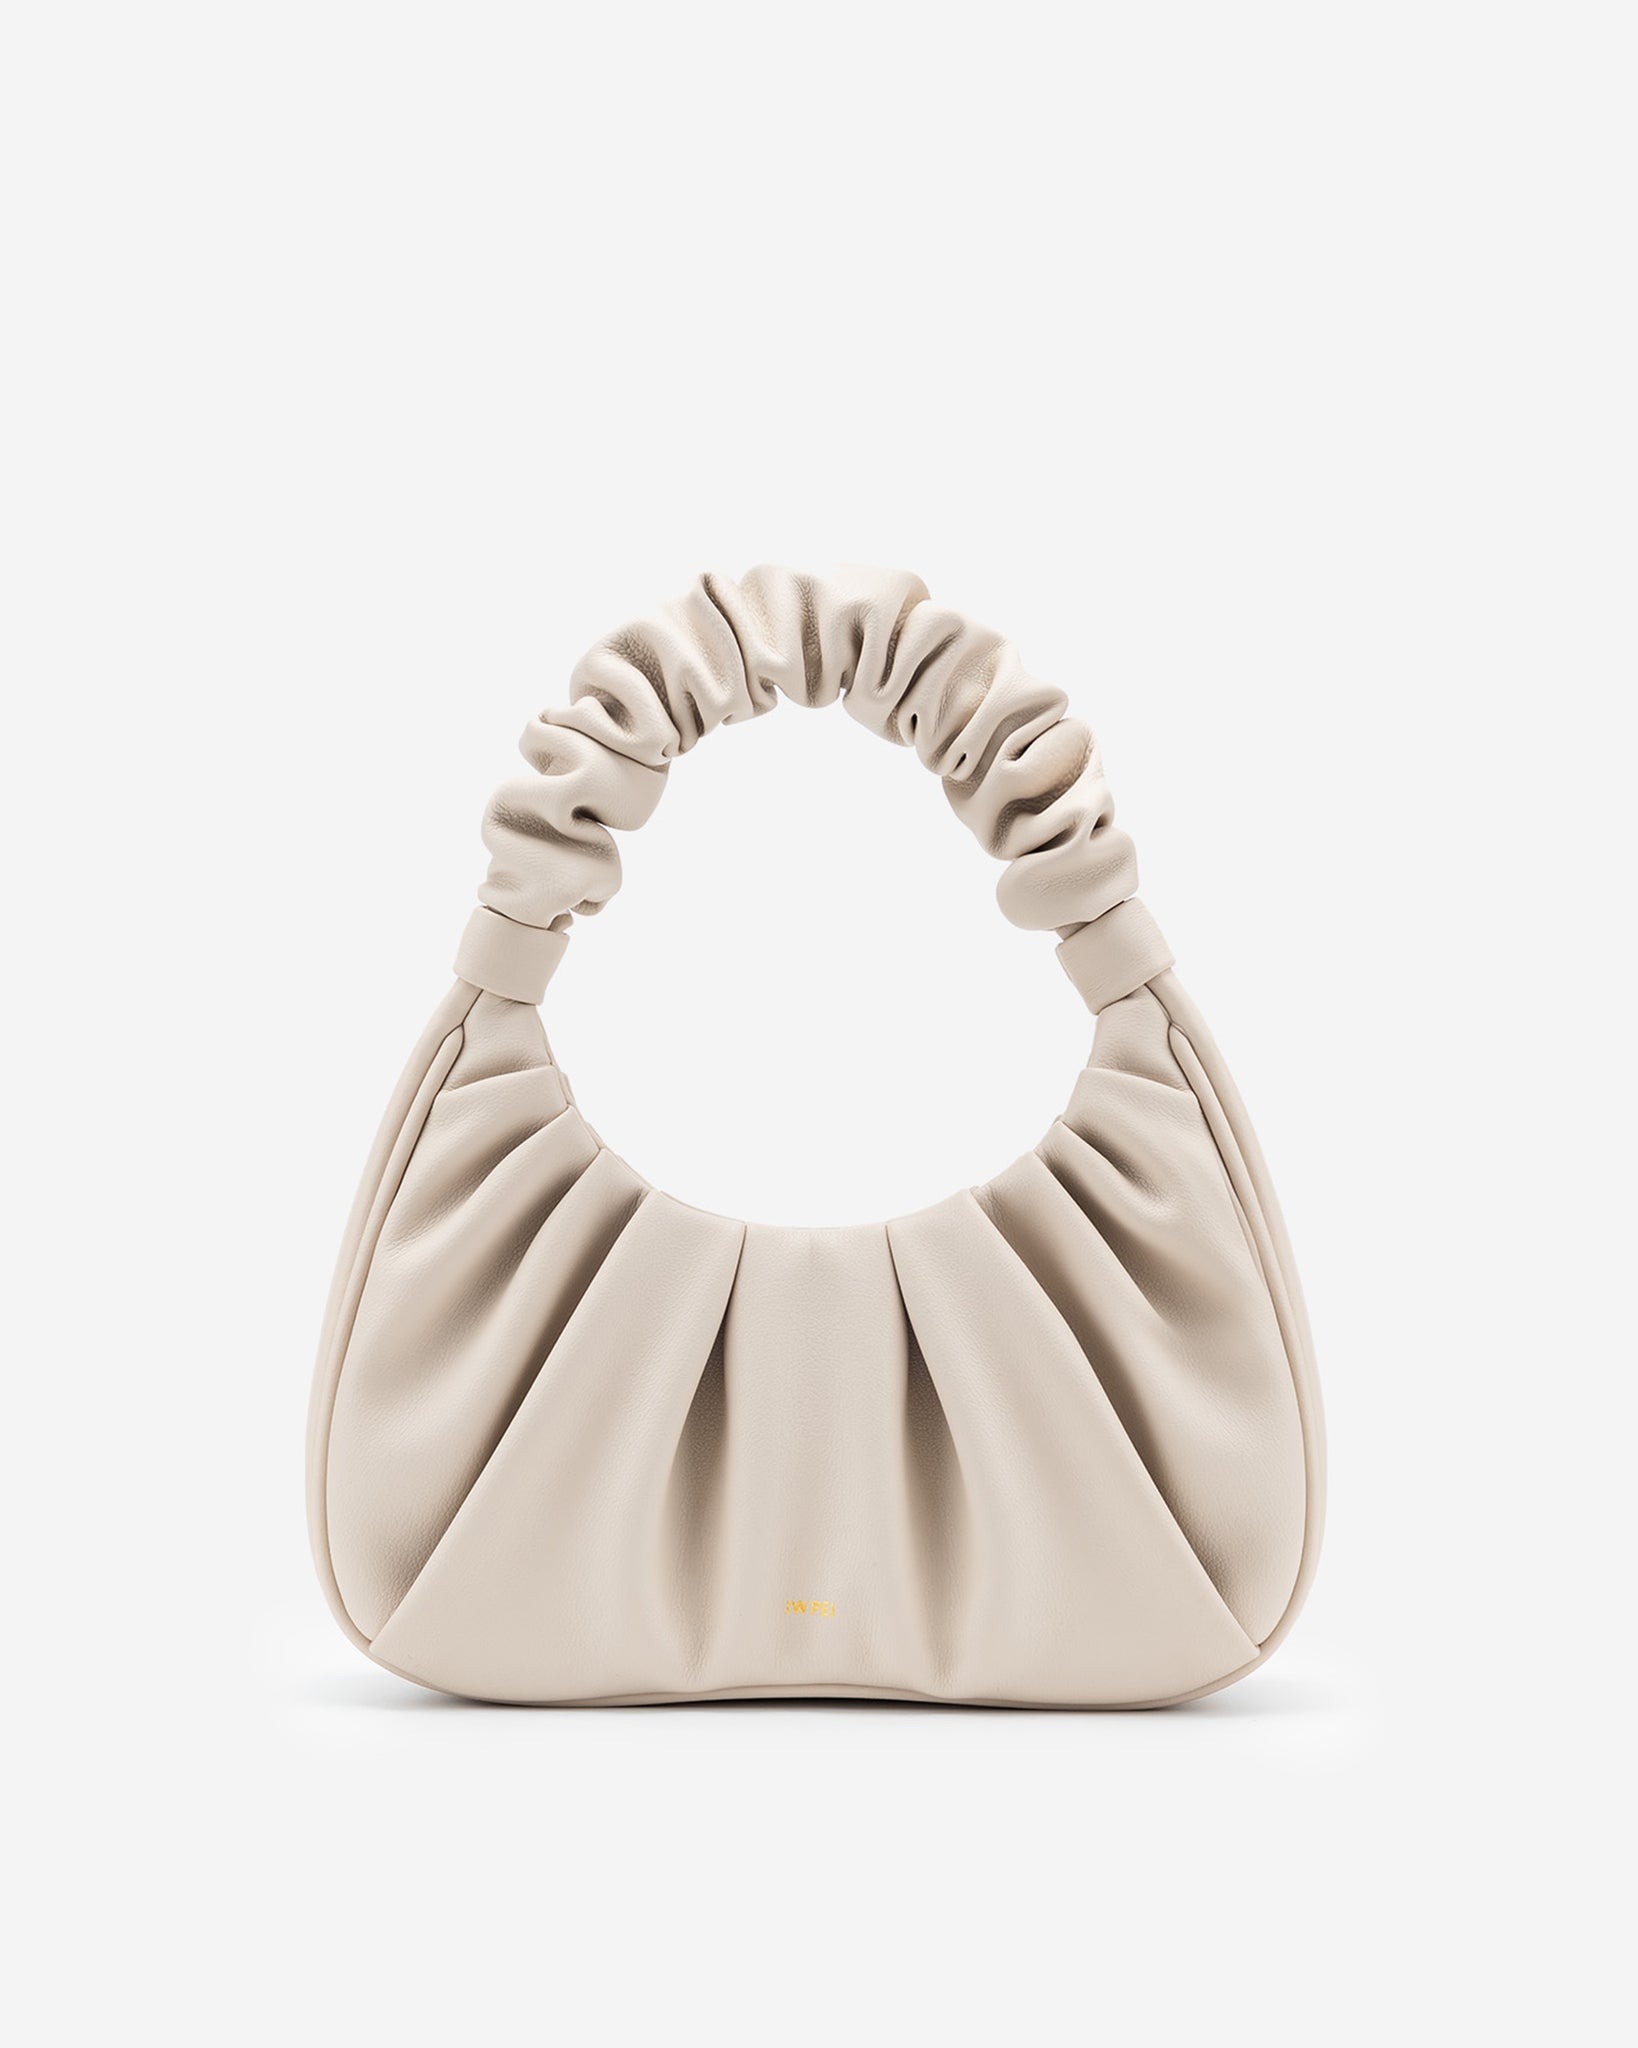 JW PEI Women's Gabbi Ruched Hobo Handbag - Ivory